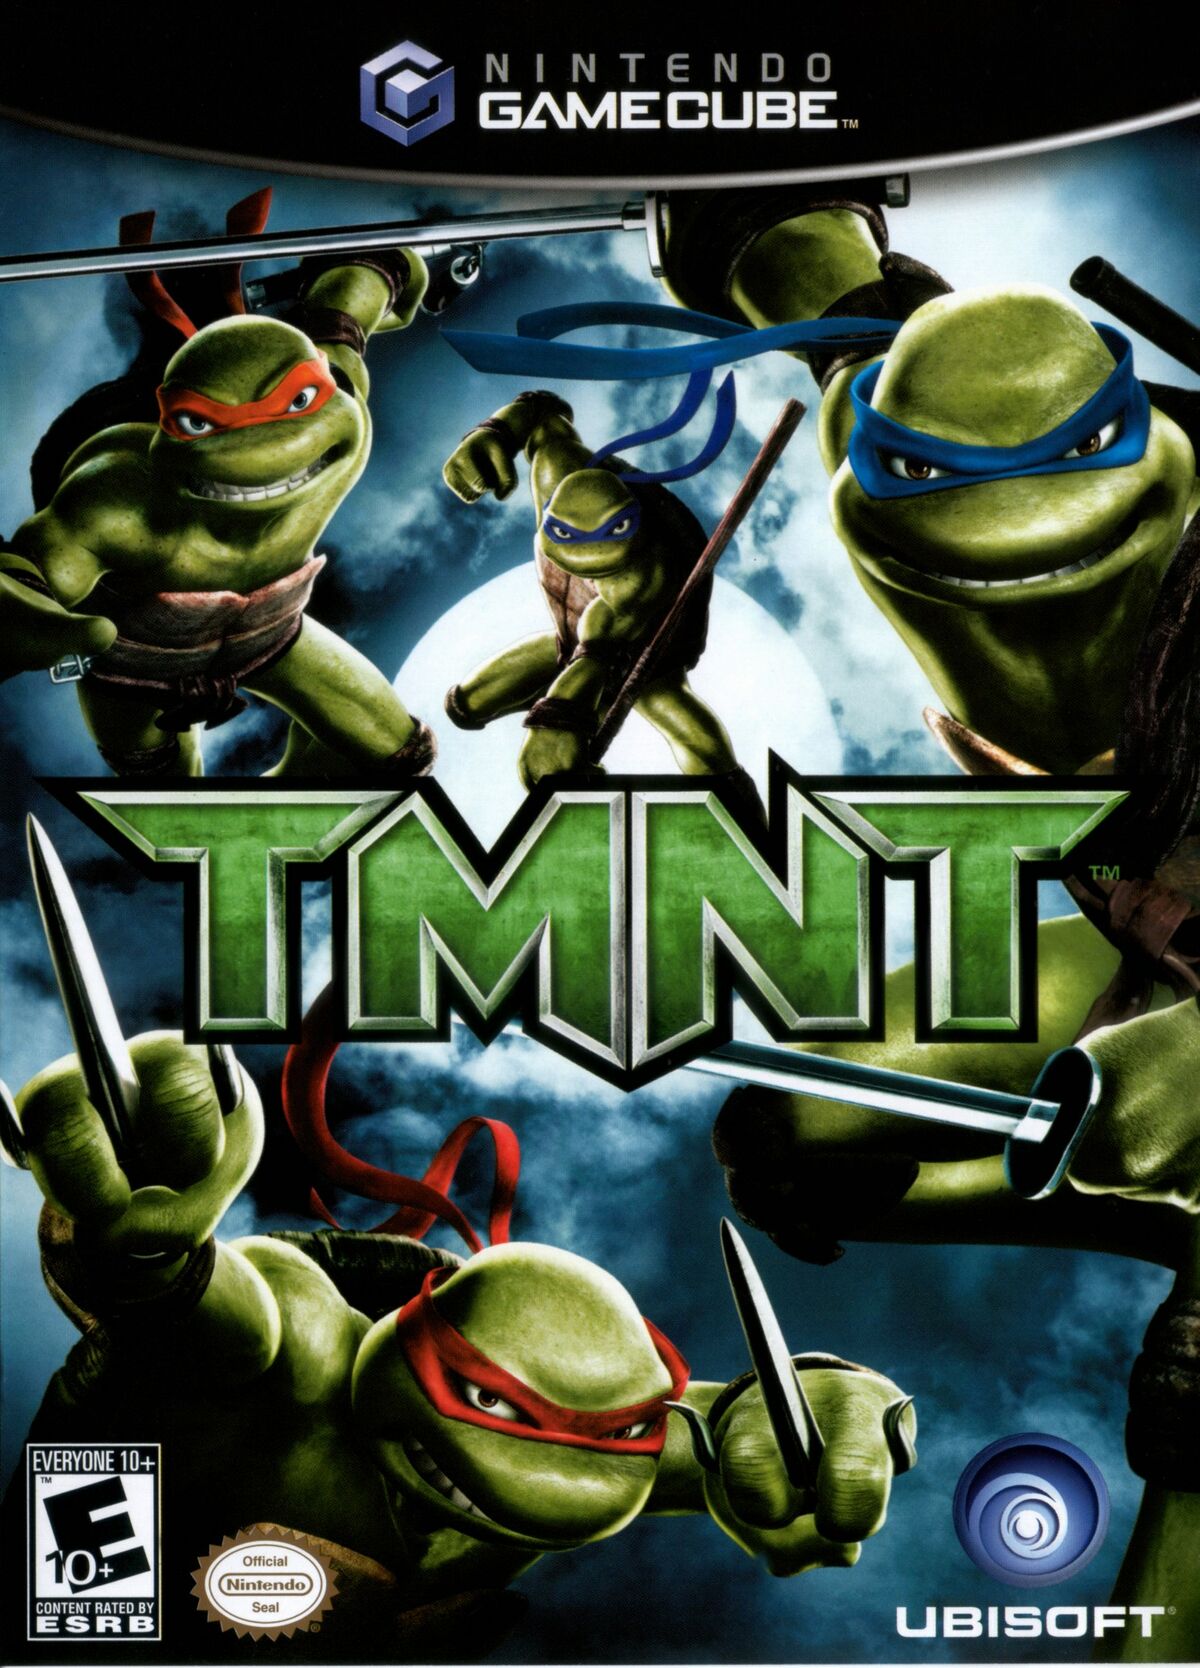 Teenage Mutant Ninja Turtles: Out of the Shadows - Wikipedia